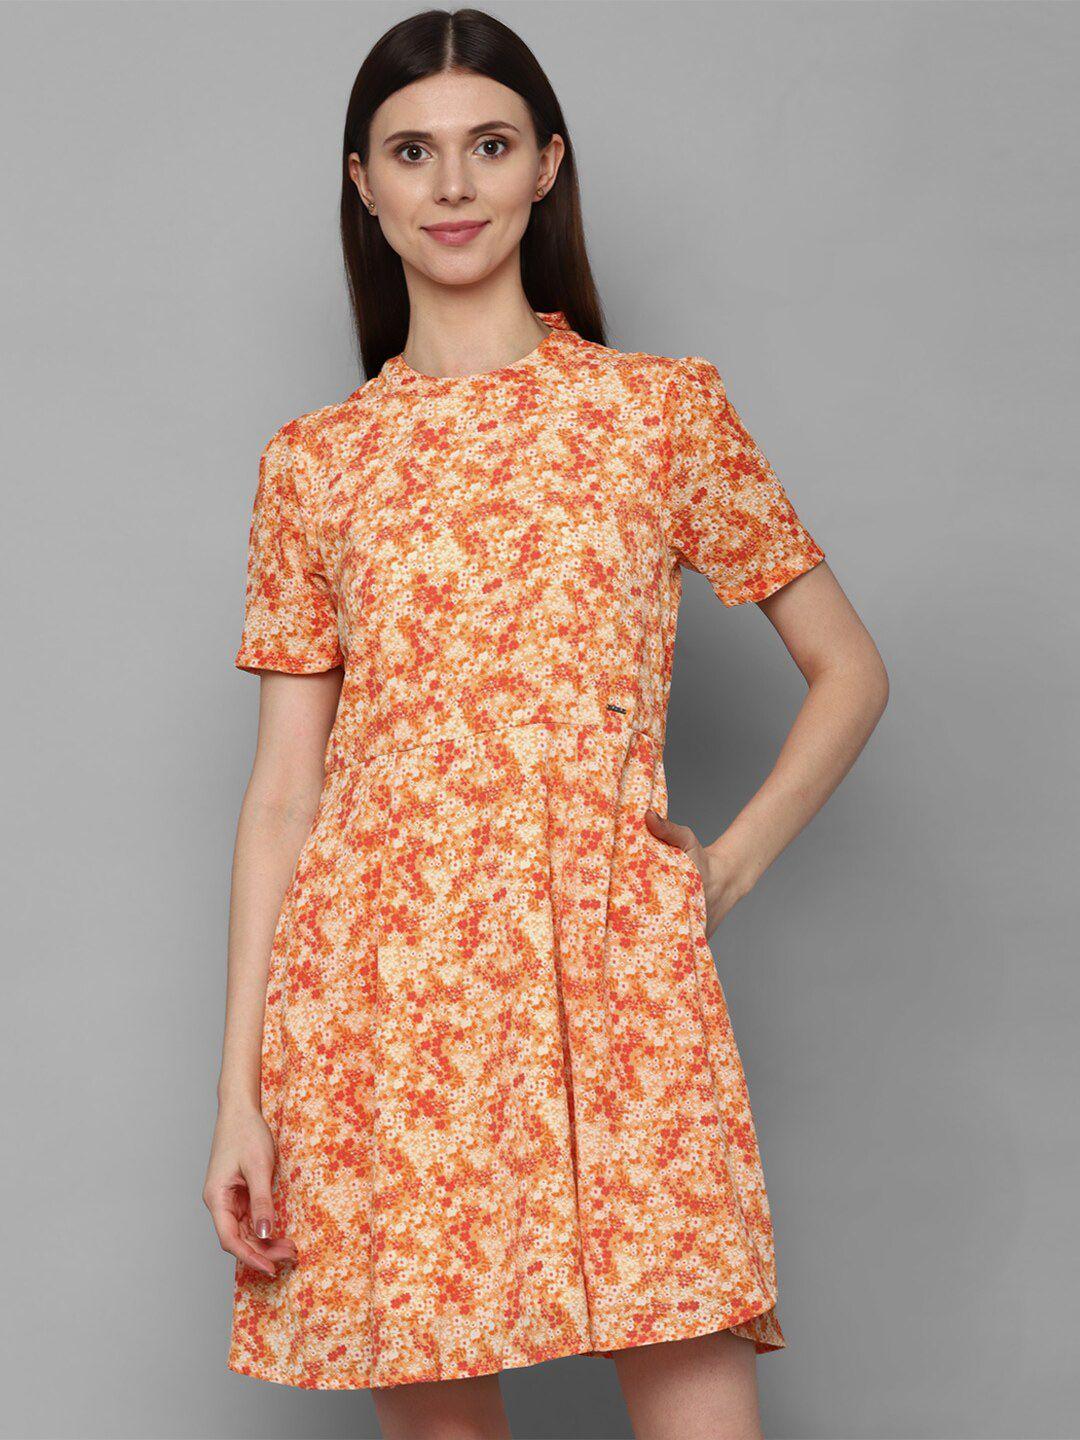 allen solly woman orange floral dress